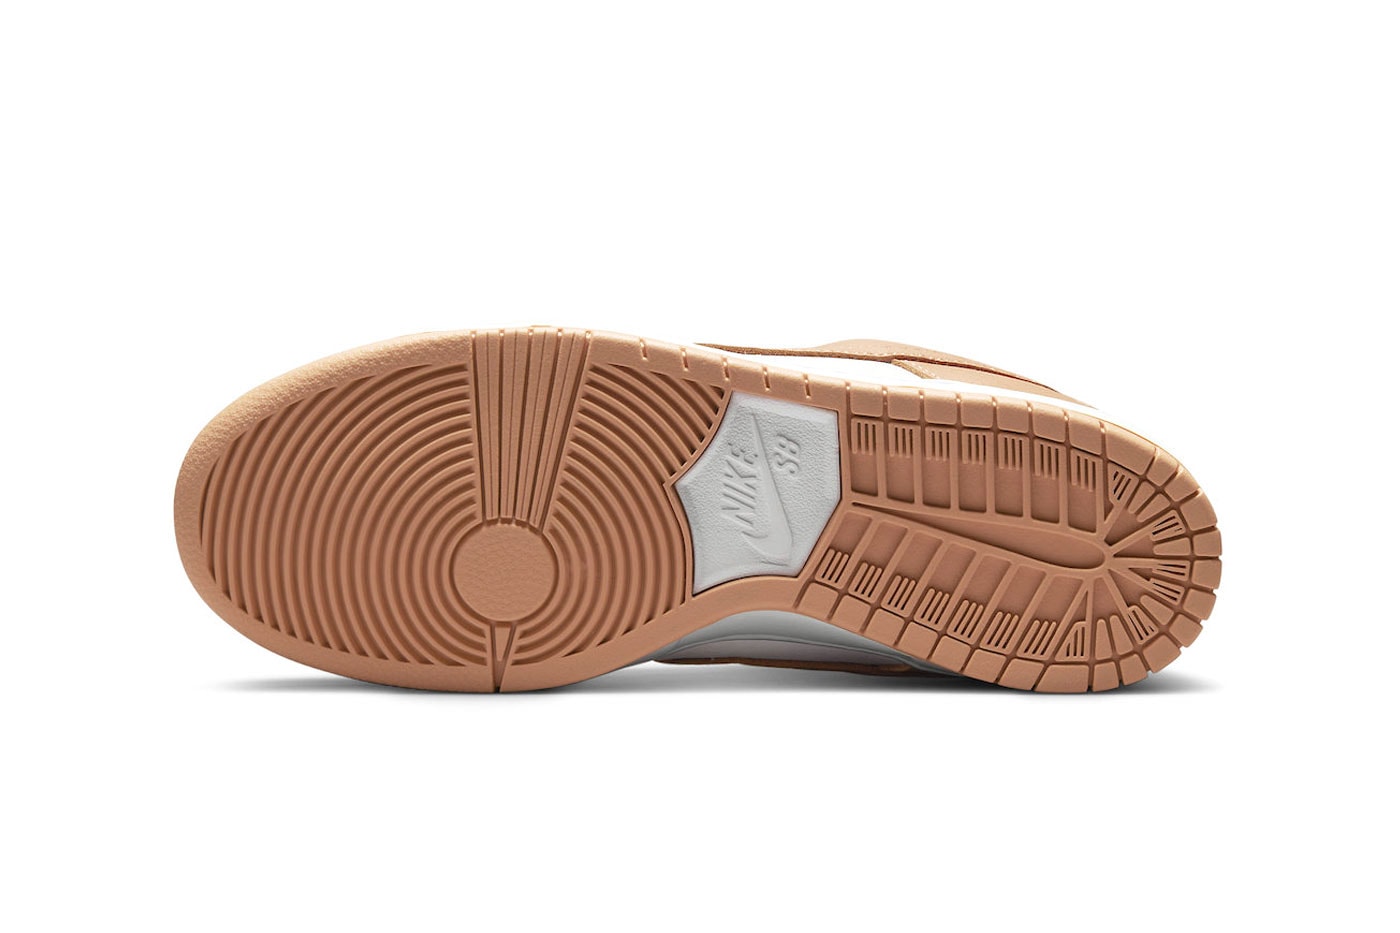 Nike SB Dunk Low light cognac dm8998-200 orange white leather tan release info price date 100 USD